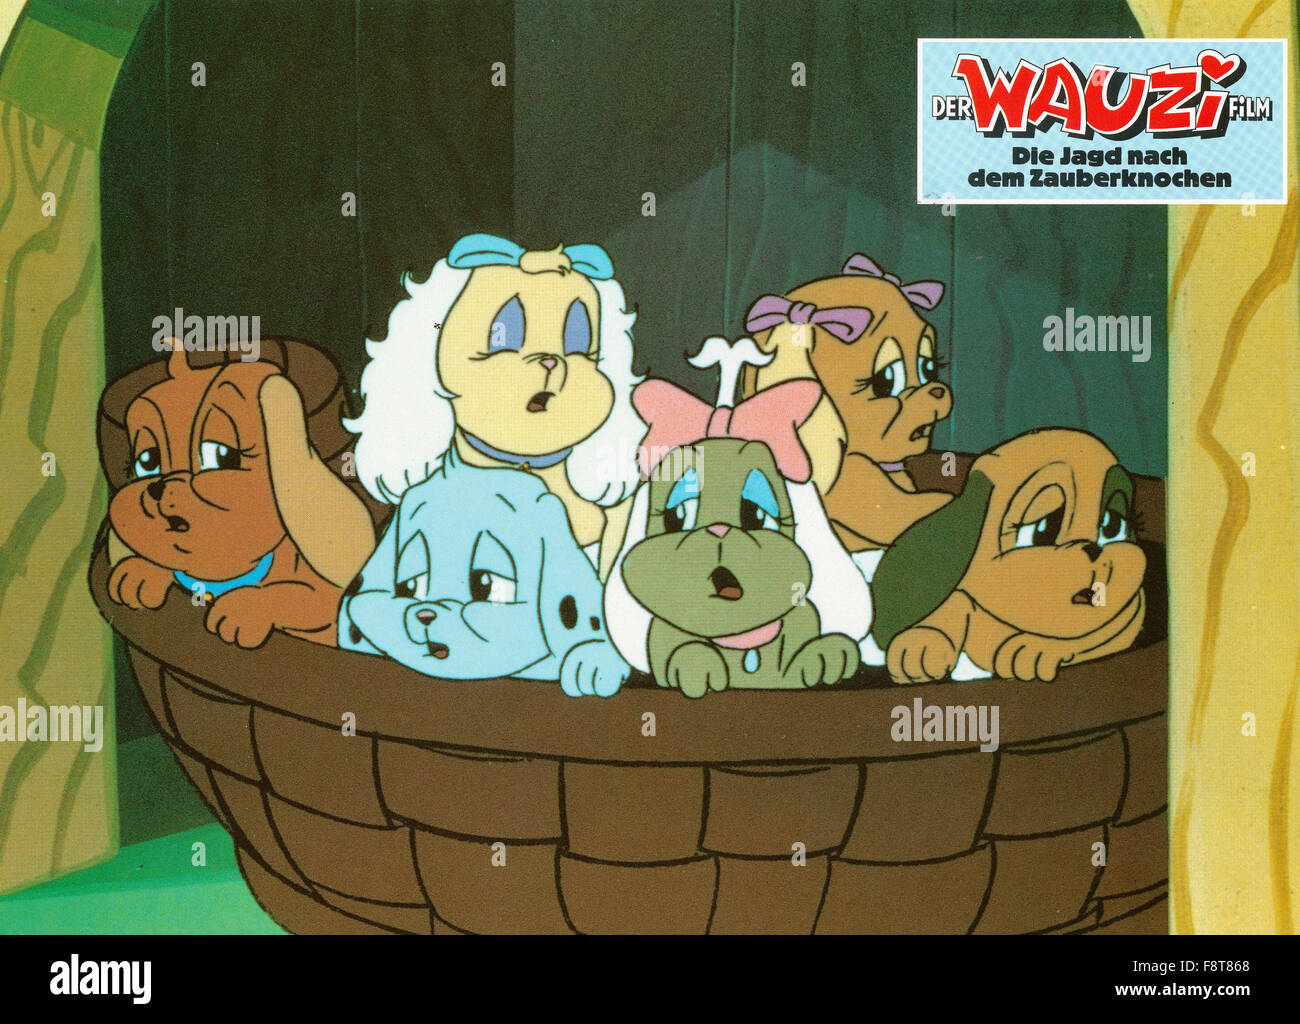 Der Wauzi-Film, Die Jagd nach dem Zauberknochen aka Pound Puppies and the  Legend of Big Paw, USA 1998, Regie: Pierre DeCelles, Szenenfoto Stock Photo  - Alamy